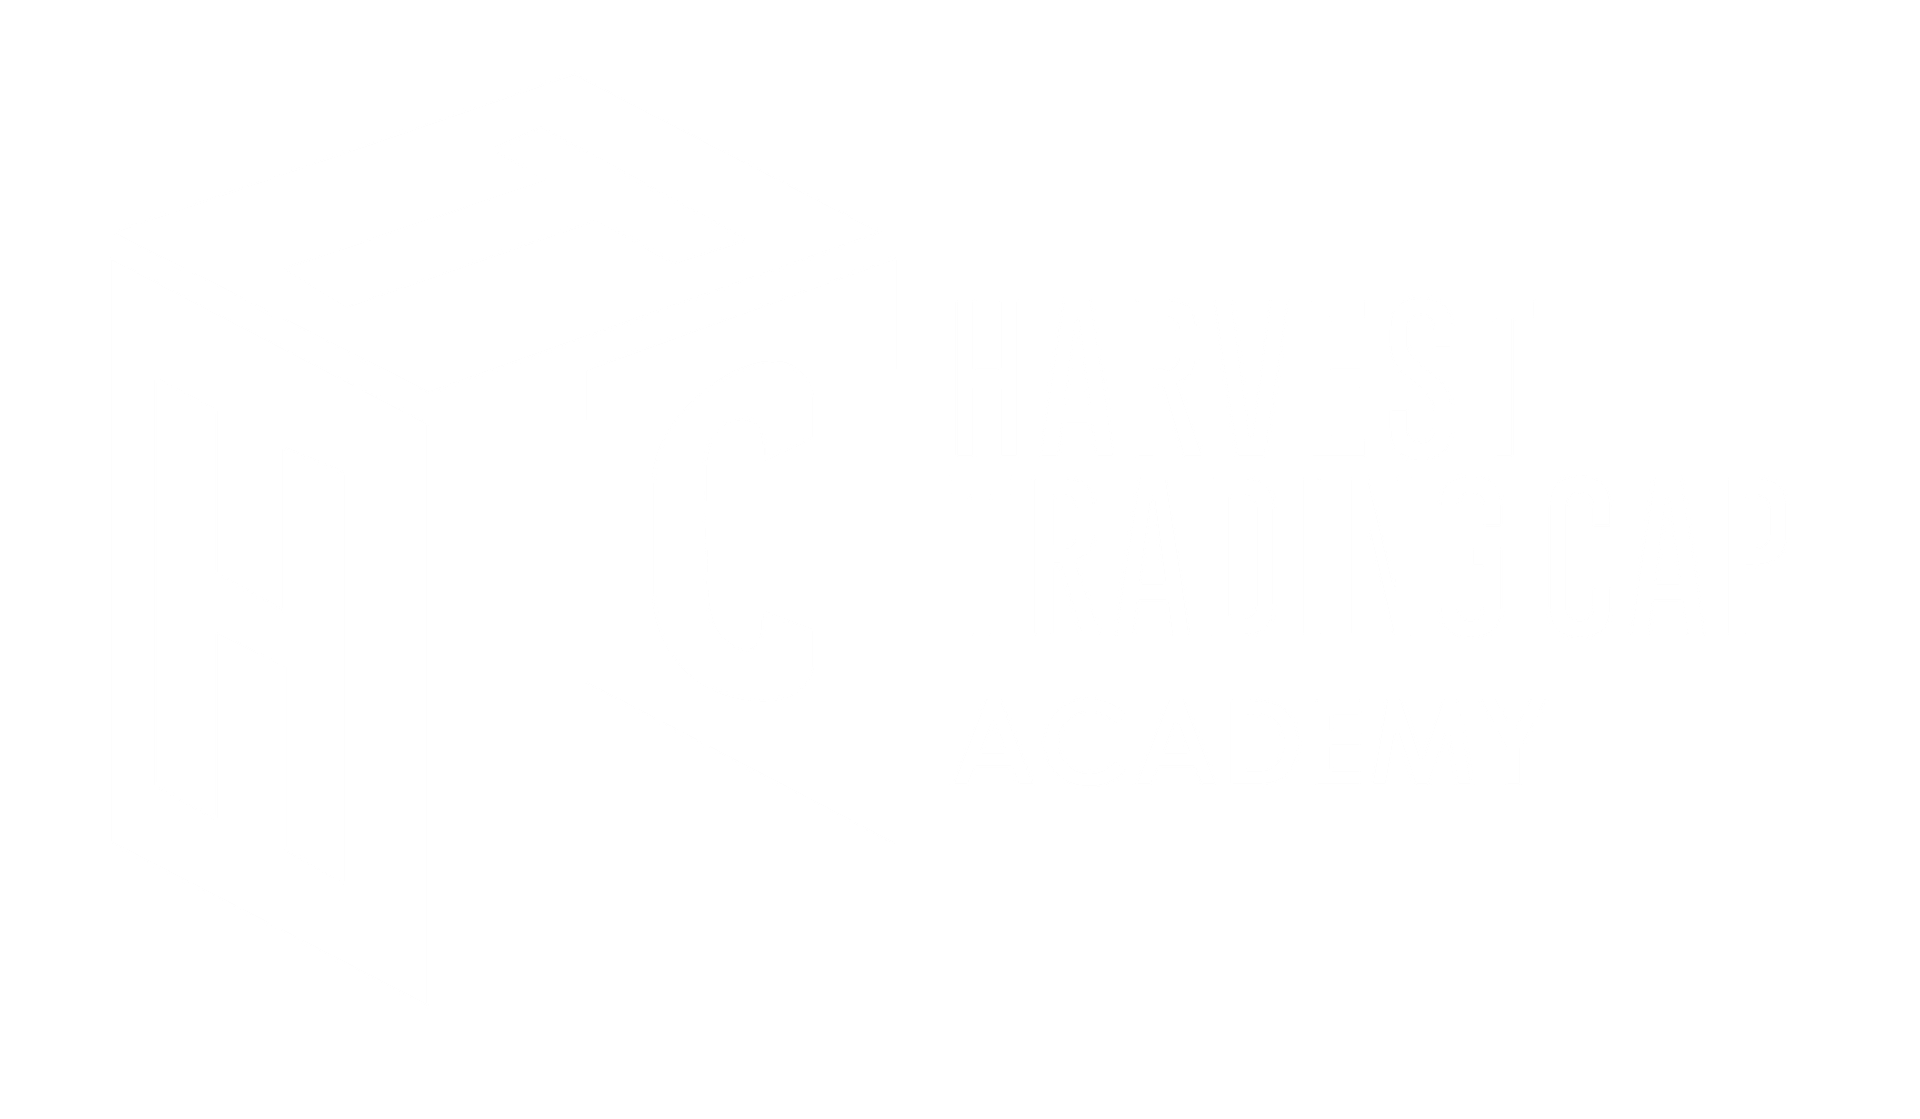 Harvest Trading Cap Academy